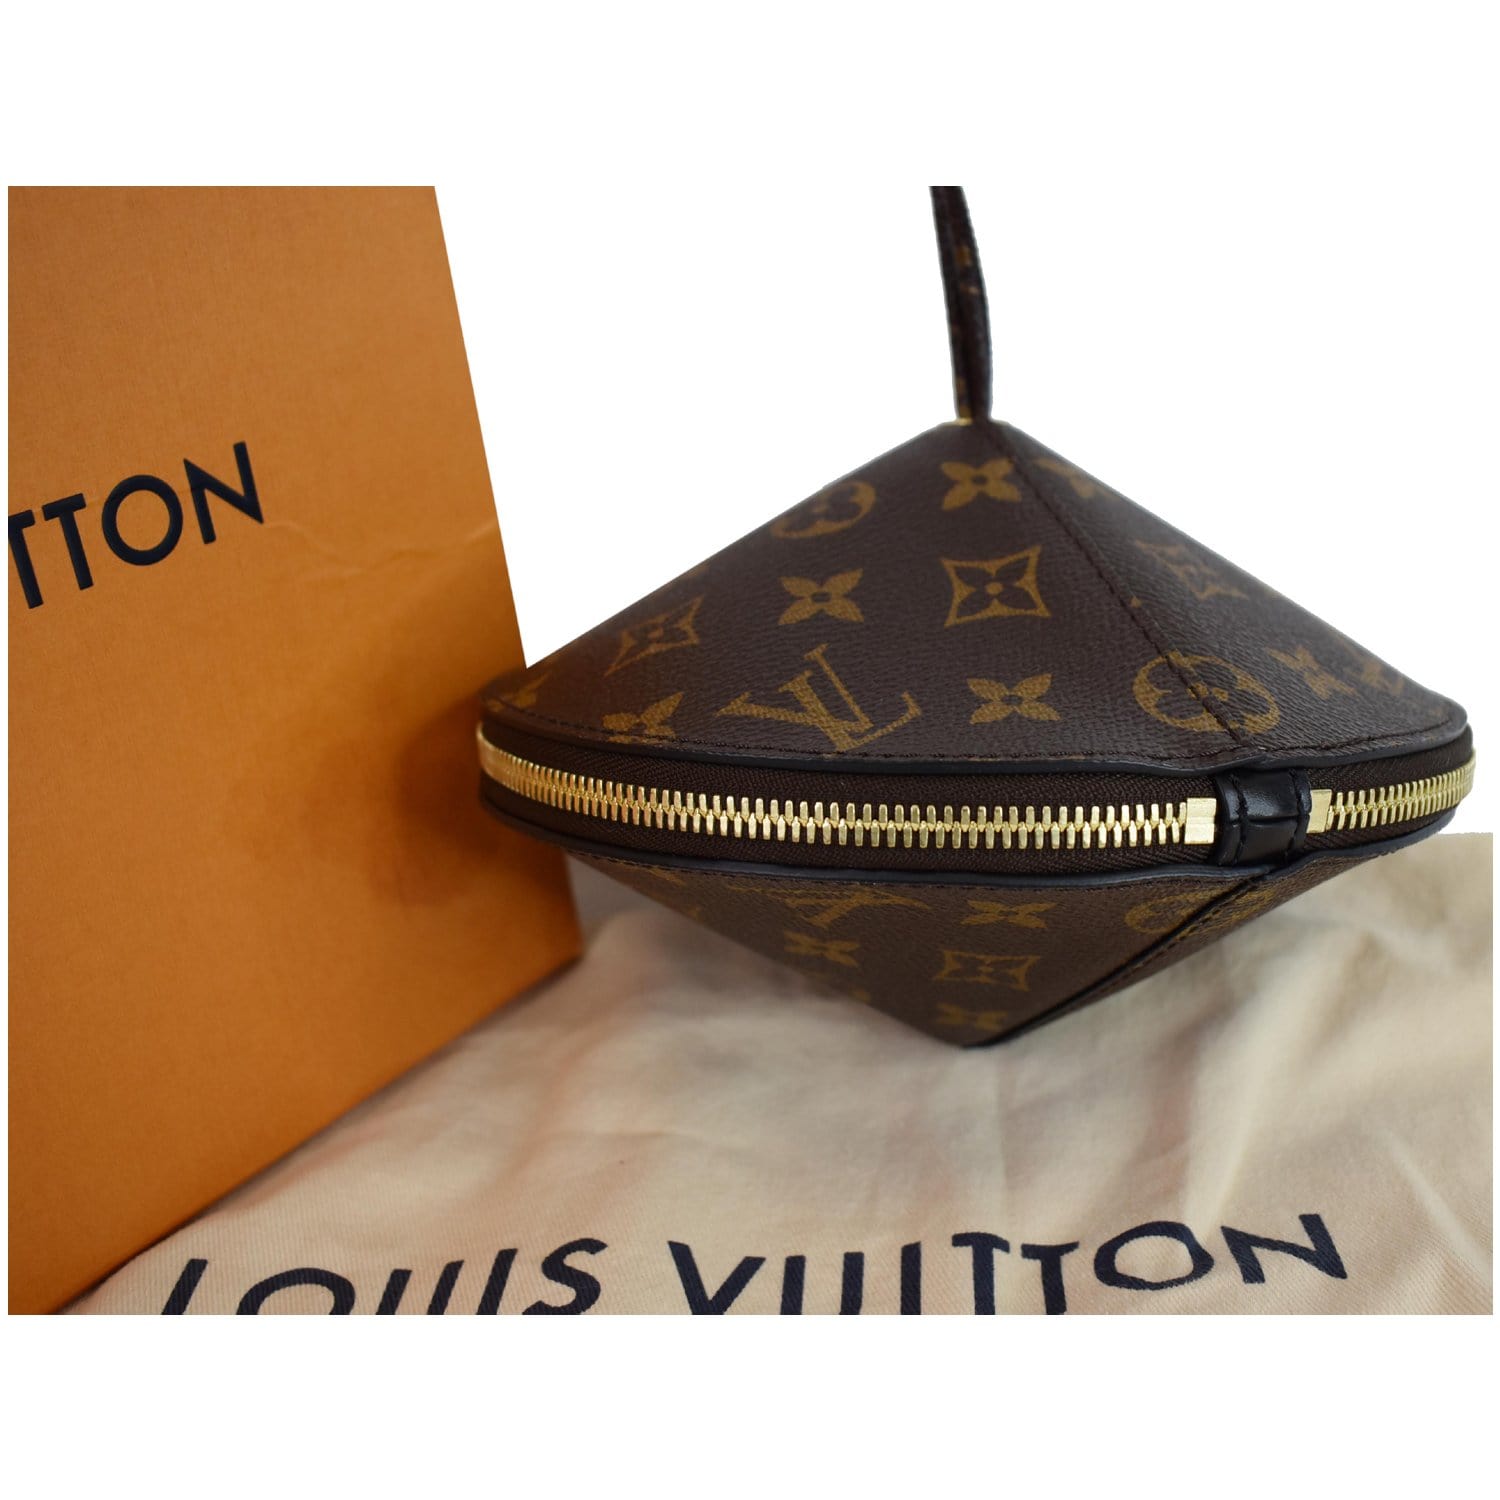 Louis Vuitton Toupie - For Sale on 1stDibs